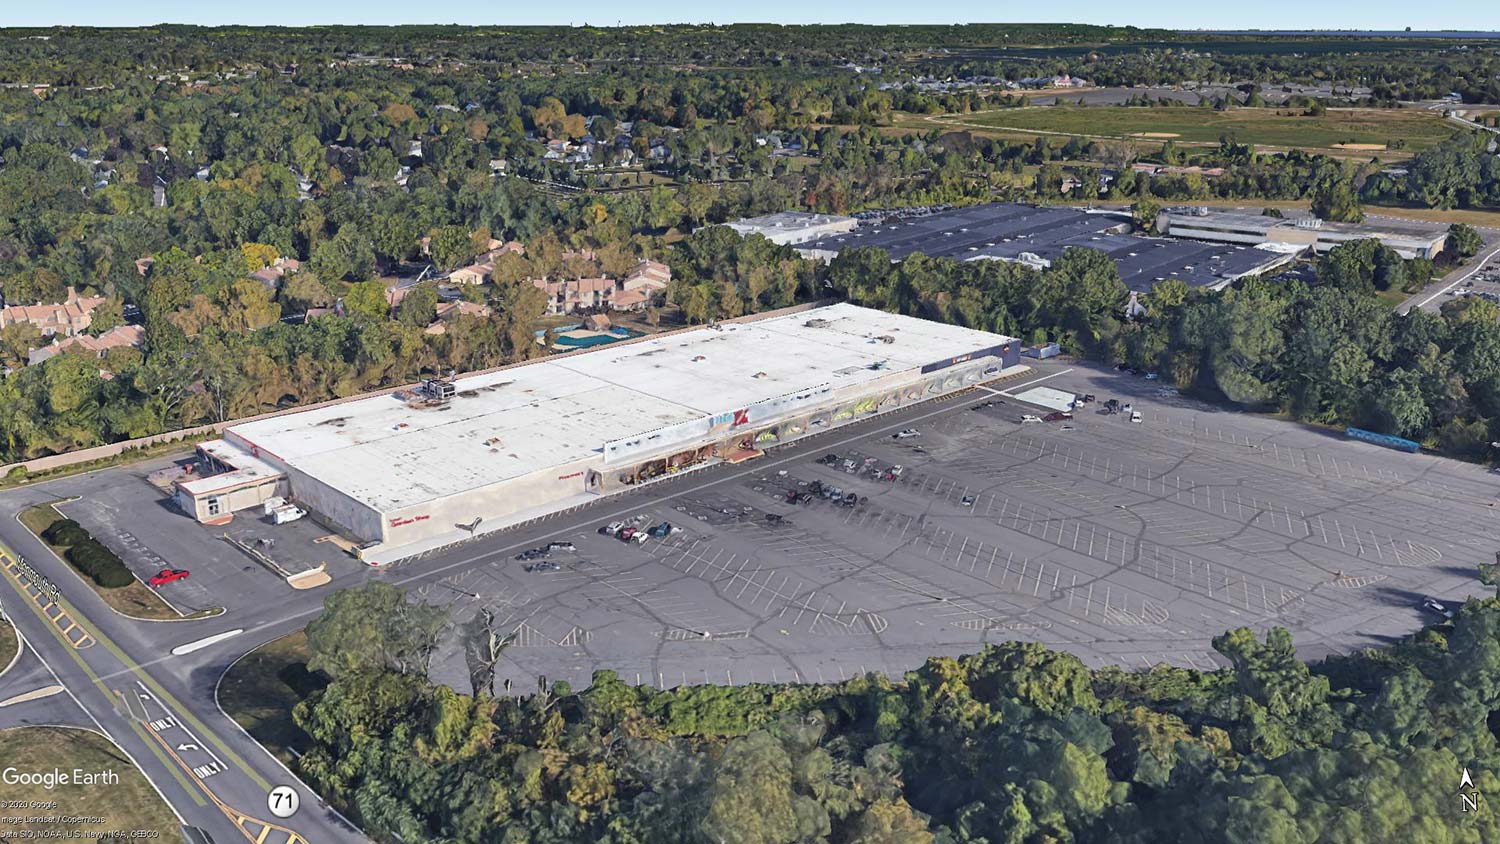 Kmart in West Long Branch NJ – Transformco Properties